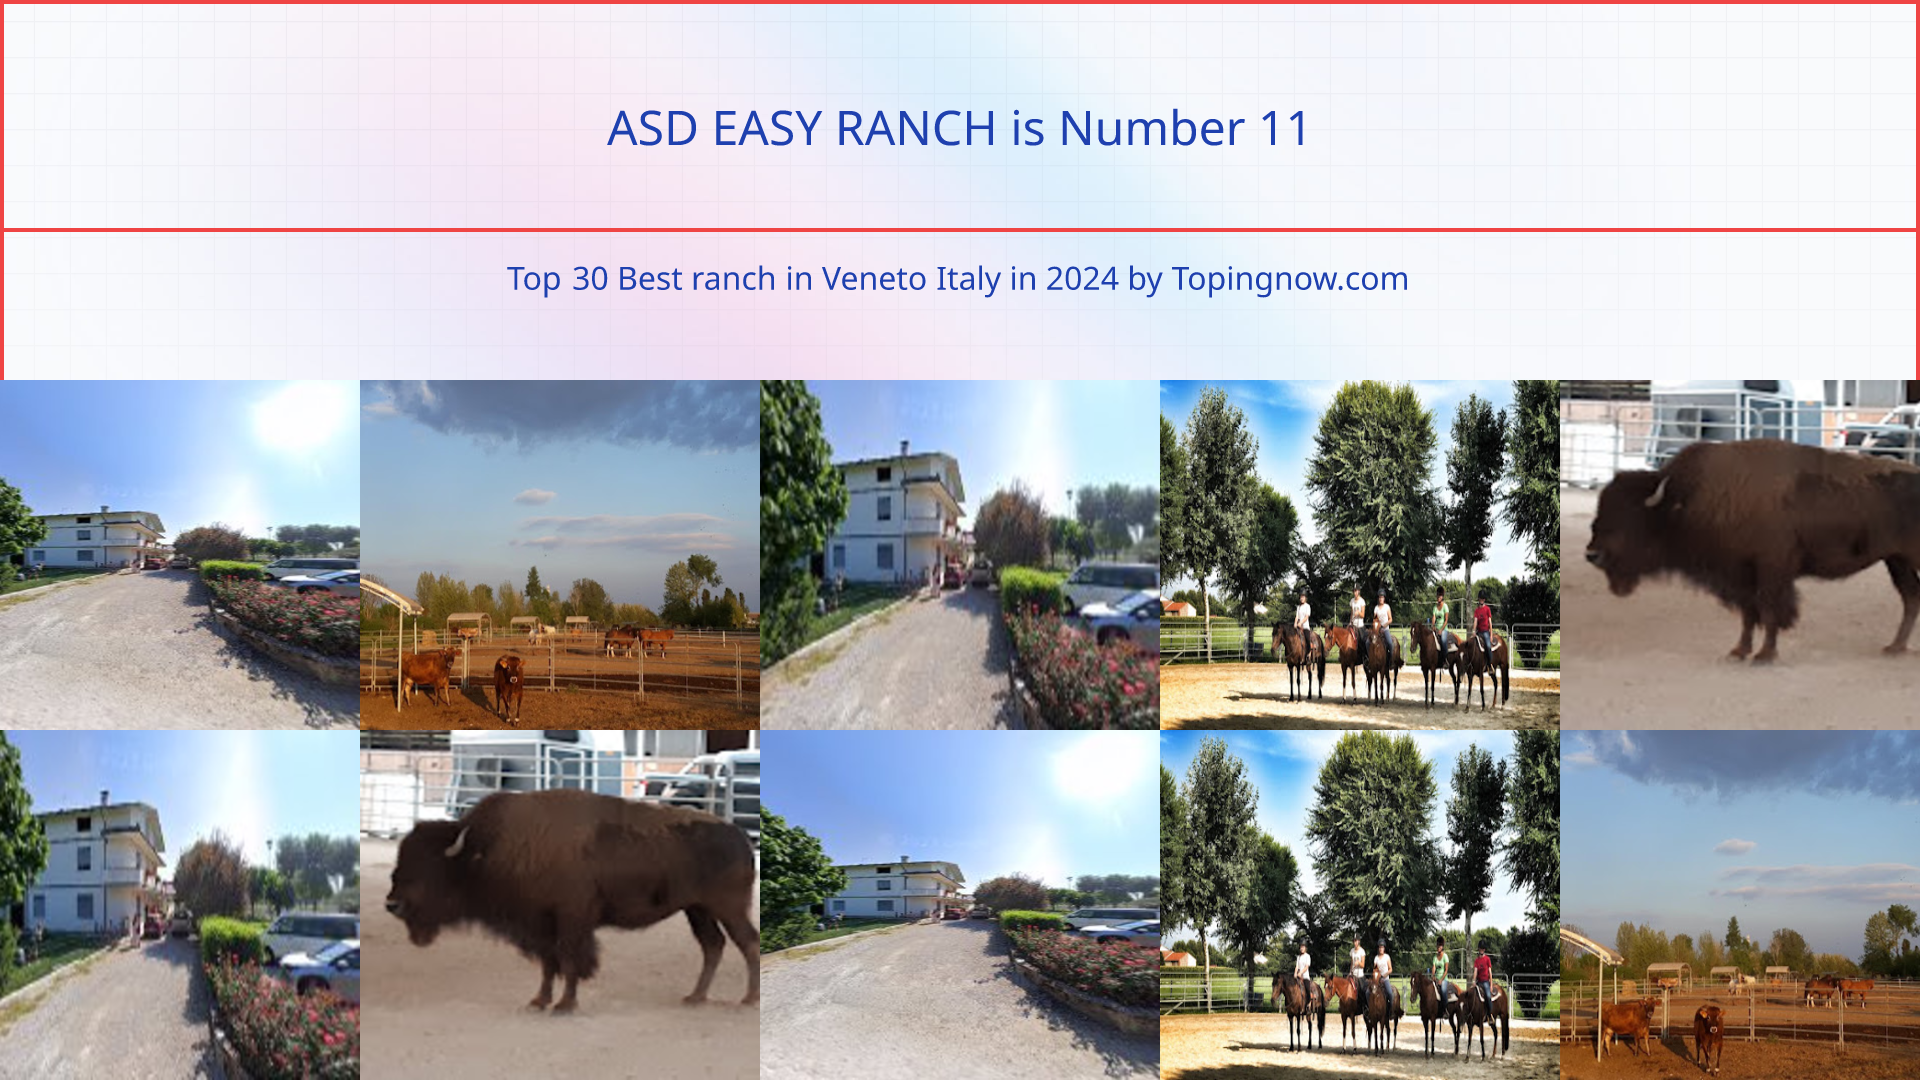 ASD EASY RANCH: Top 30 Best ranch in Veneto Italy in 2024